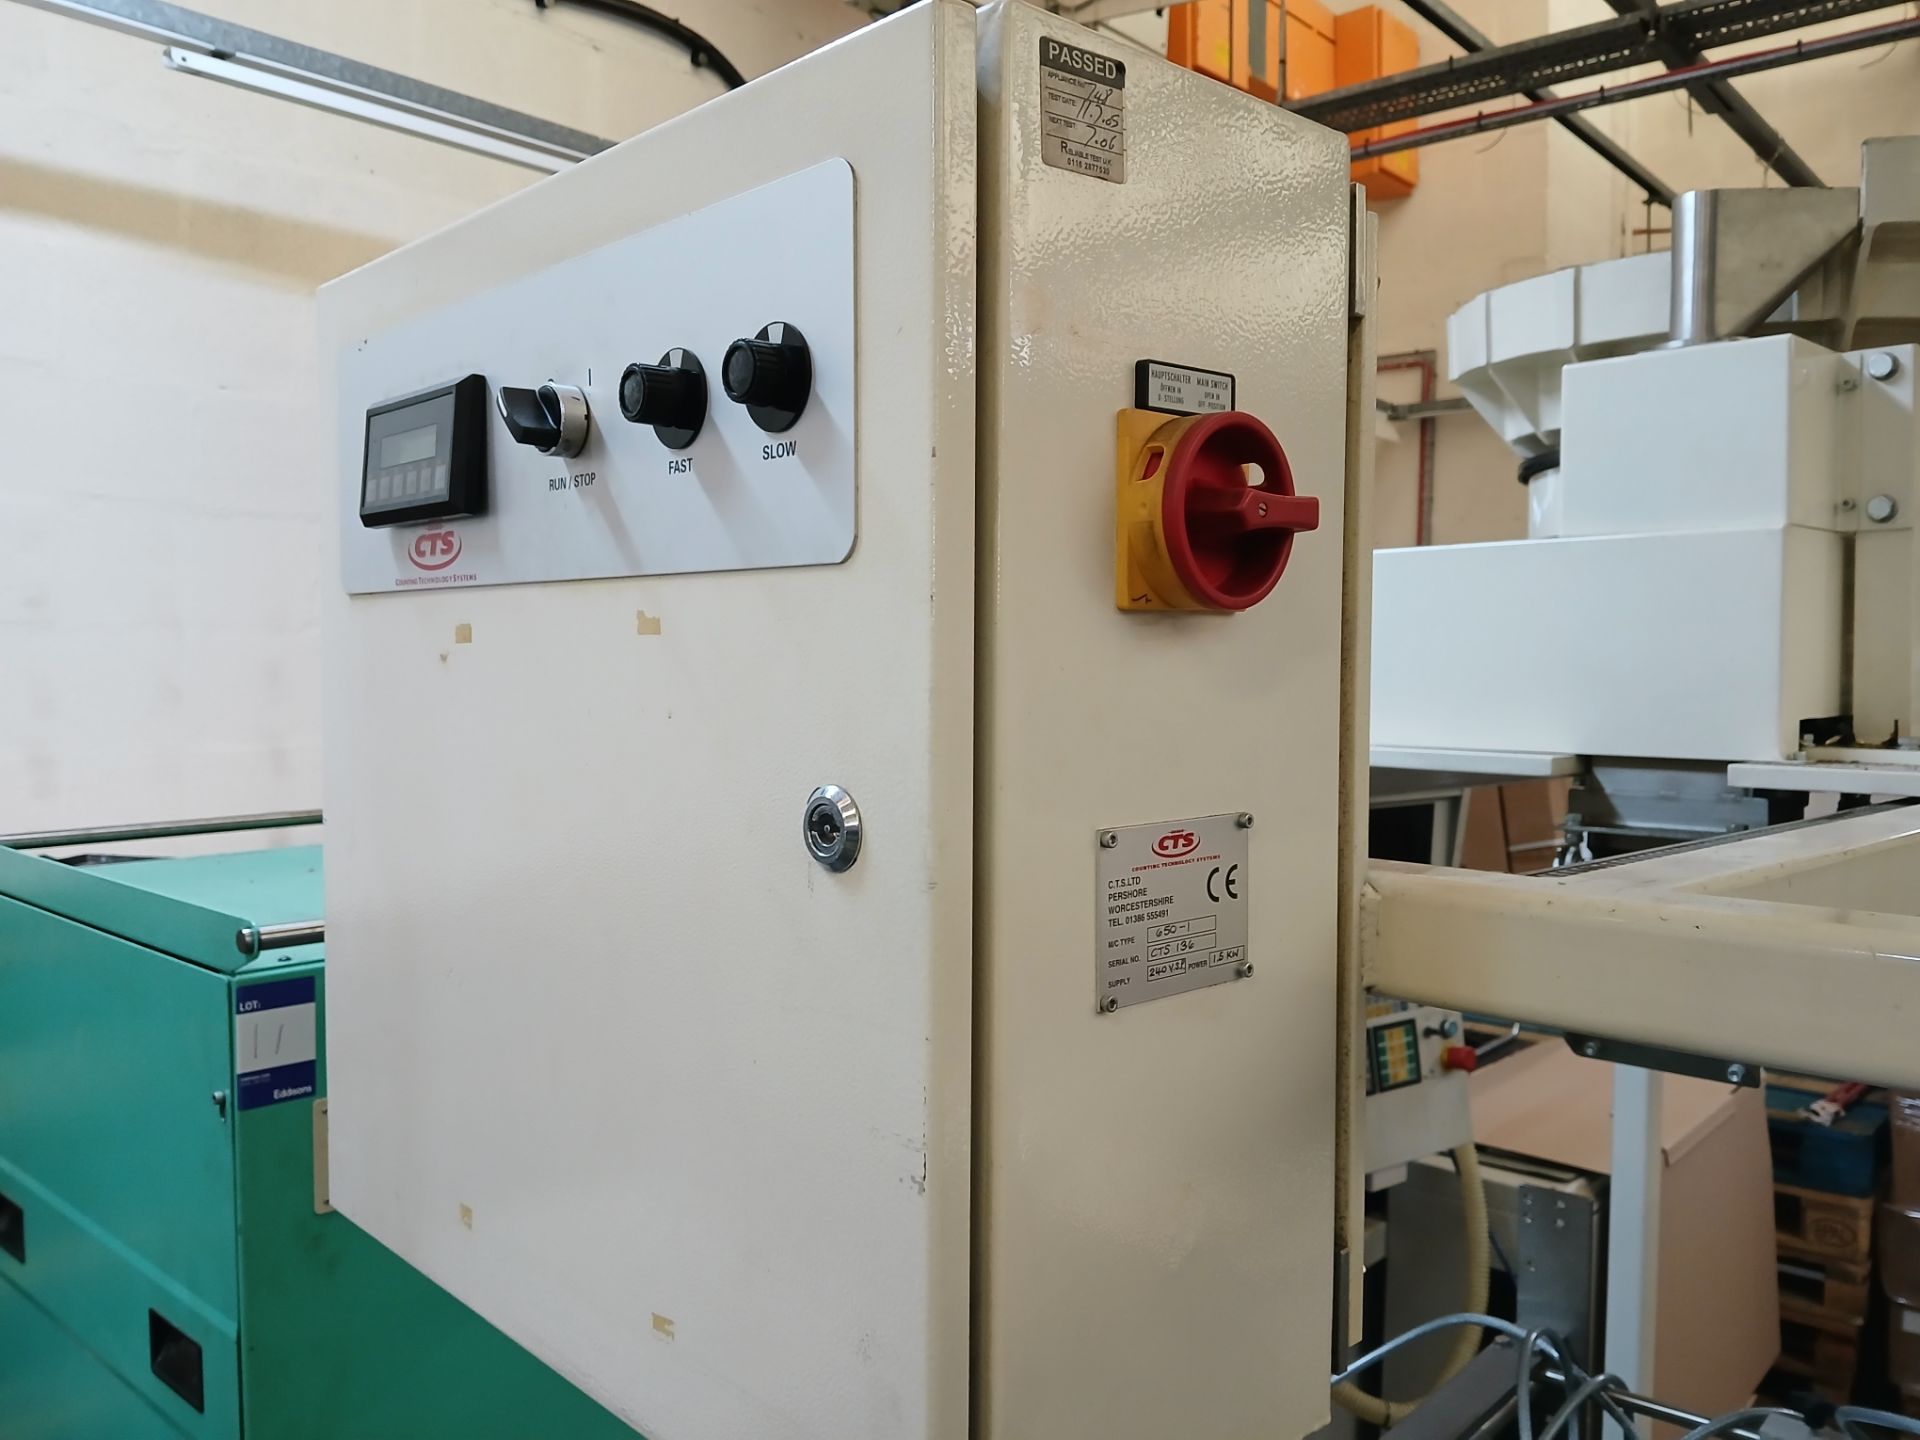 Gainsborough GV2K1 packing machine, max pack 200mm x 200mm, 75 p/min, Serial number 801777 (2019) - Image 8 of 8